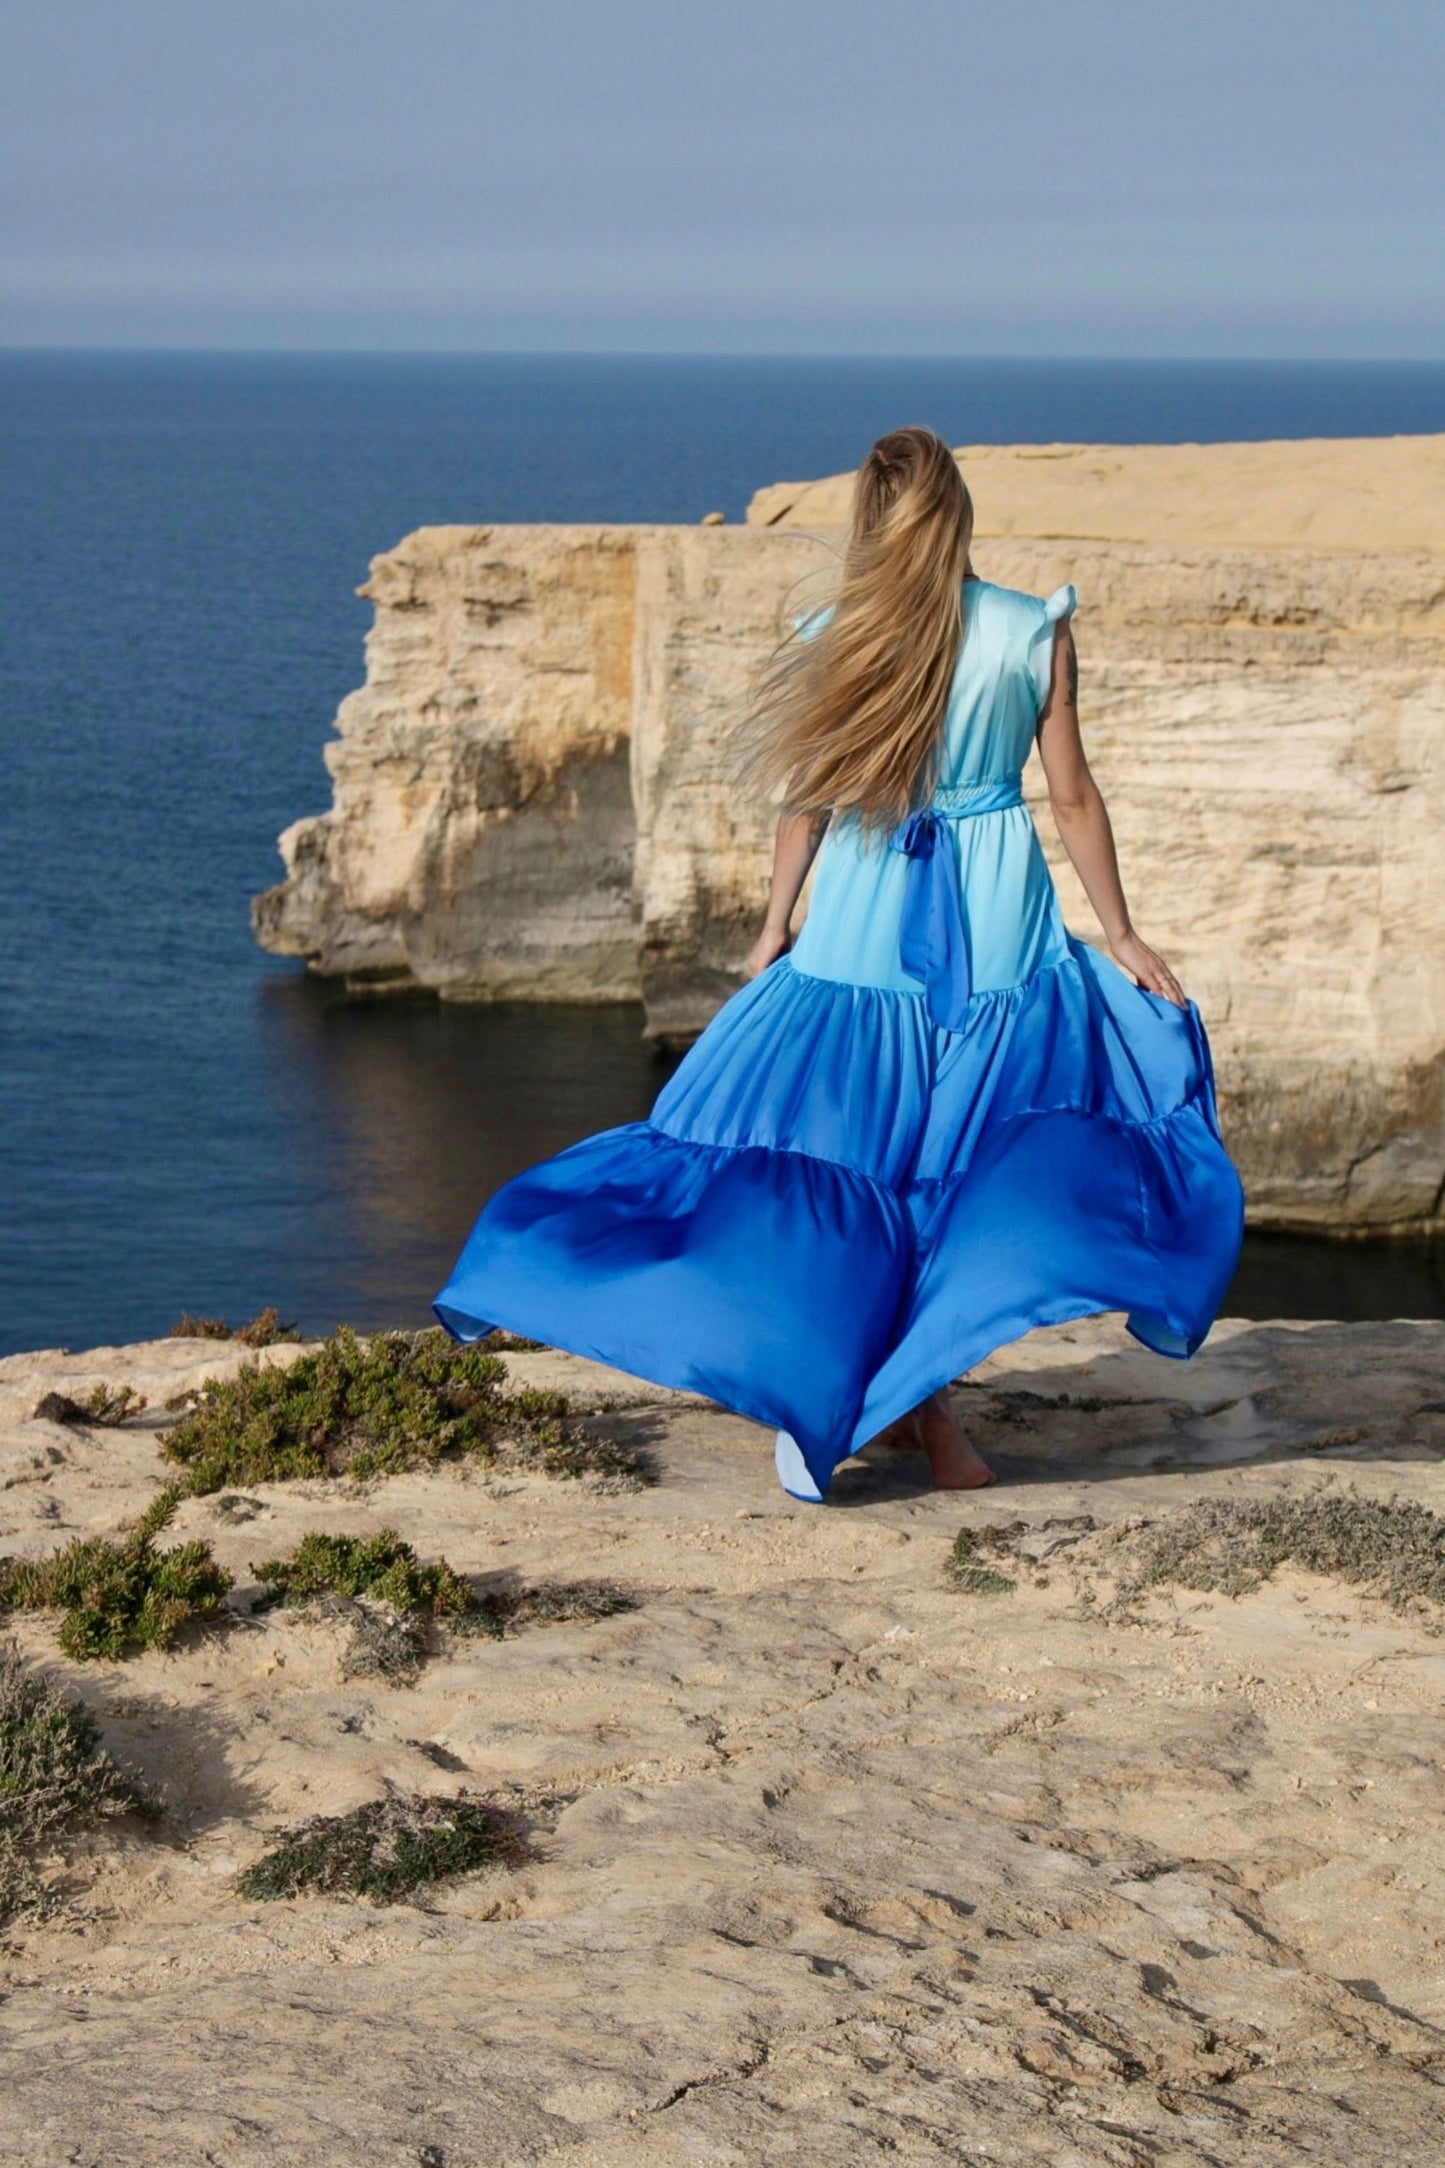 Fairytale dress in blue tones